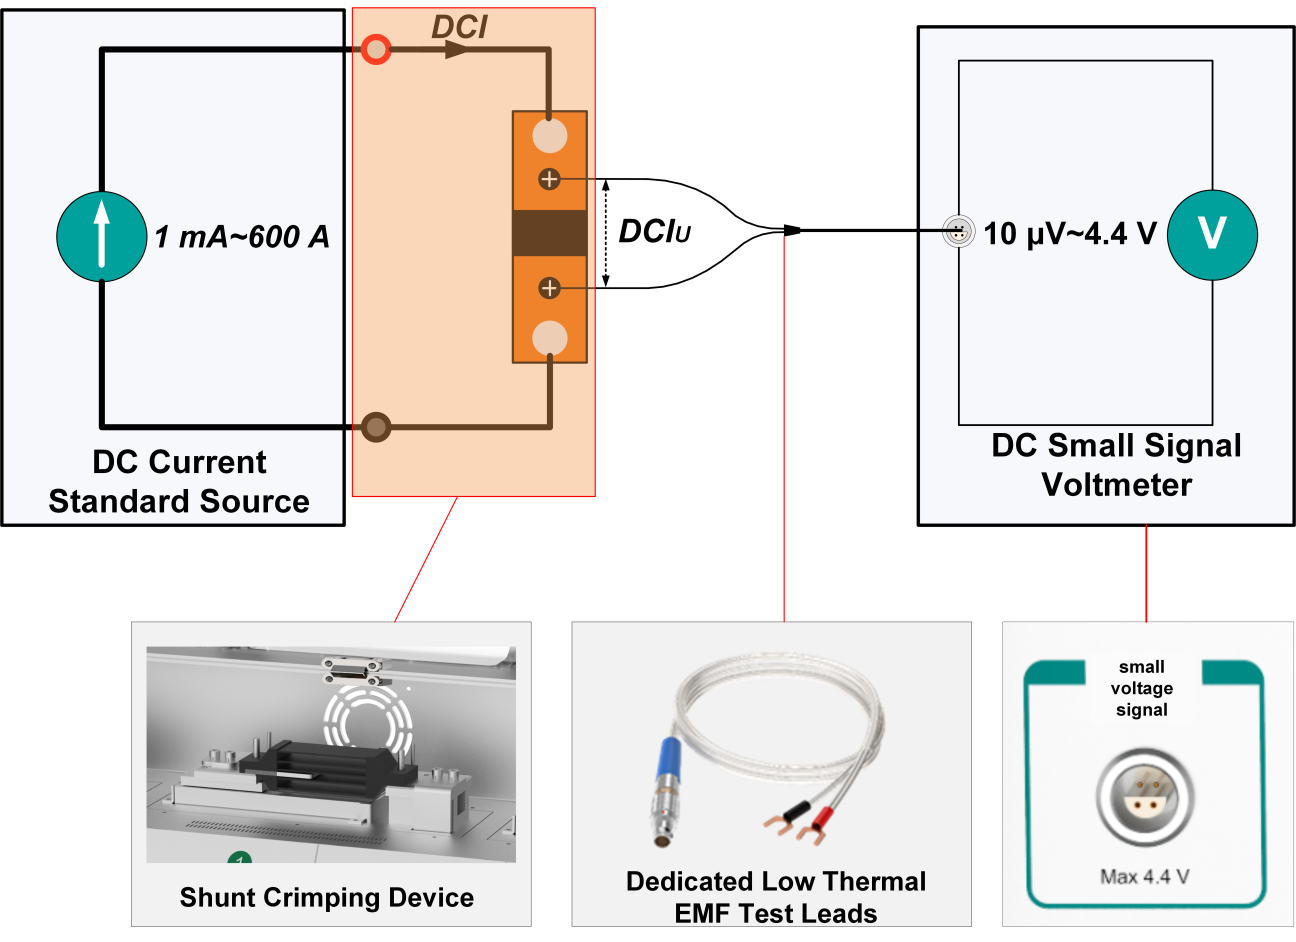 TD1548 DC Energy Meter Comprehensive Verification Device tunkia